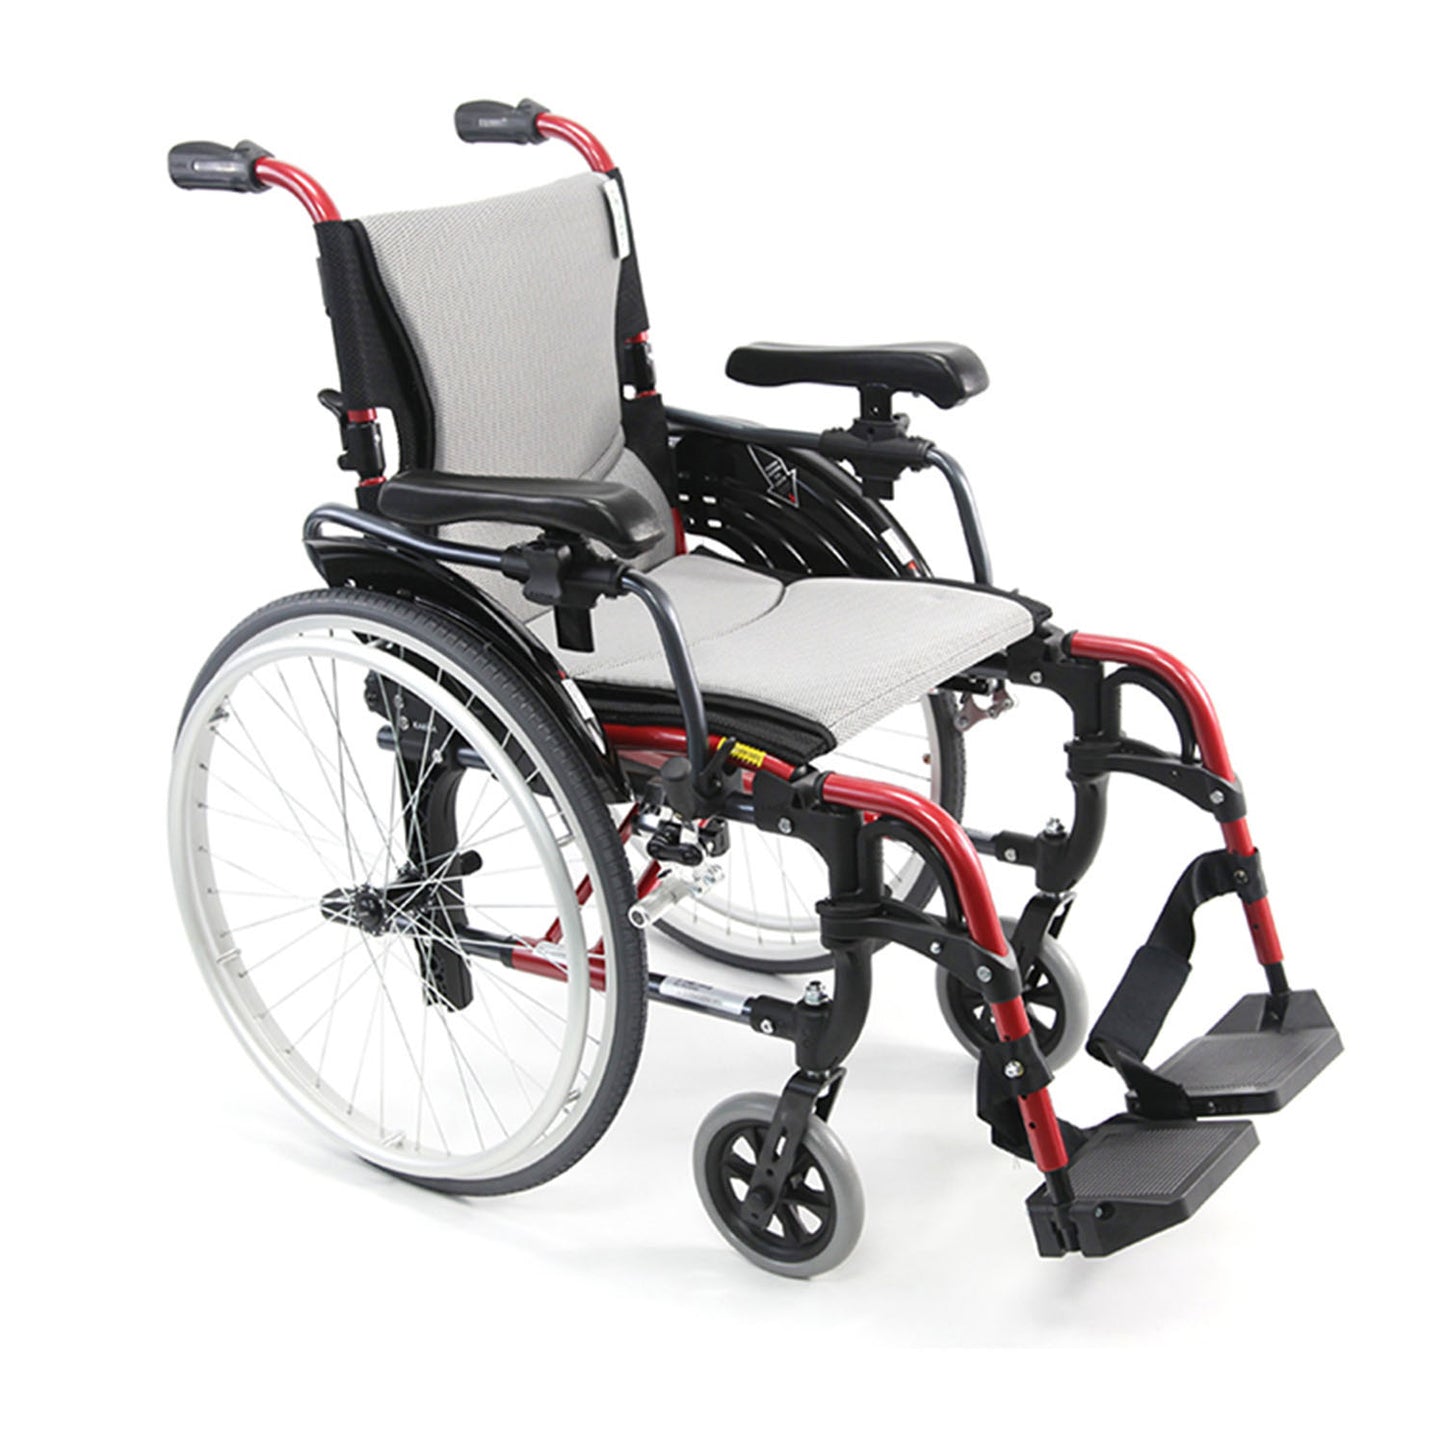 Karman S-Ergo 305 Ultra Lightweight Ergonomic Wheelchair with Adjustable Seat Height